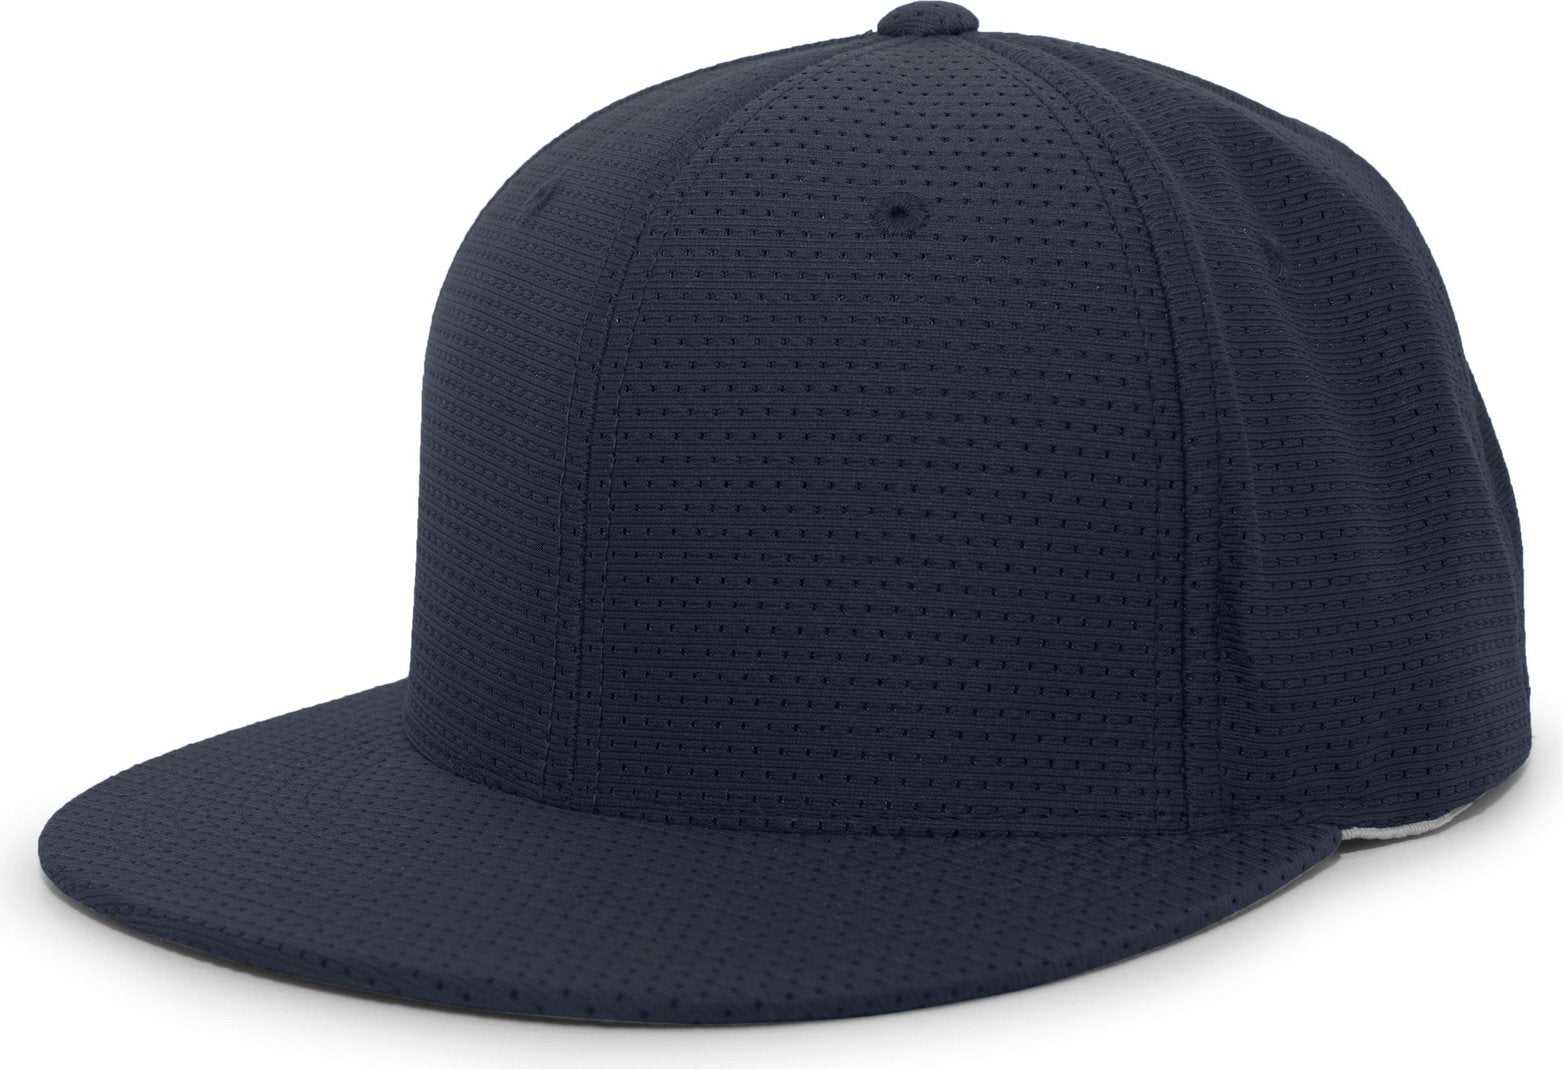 Pacific Headwear ES818 Air Jersey Performance Flexfit Cap - Navy - HIT a Double